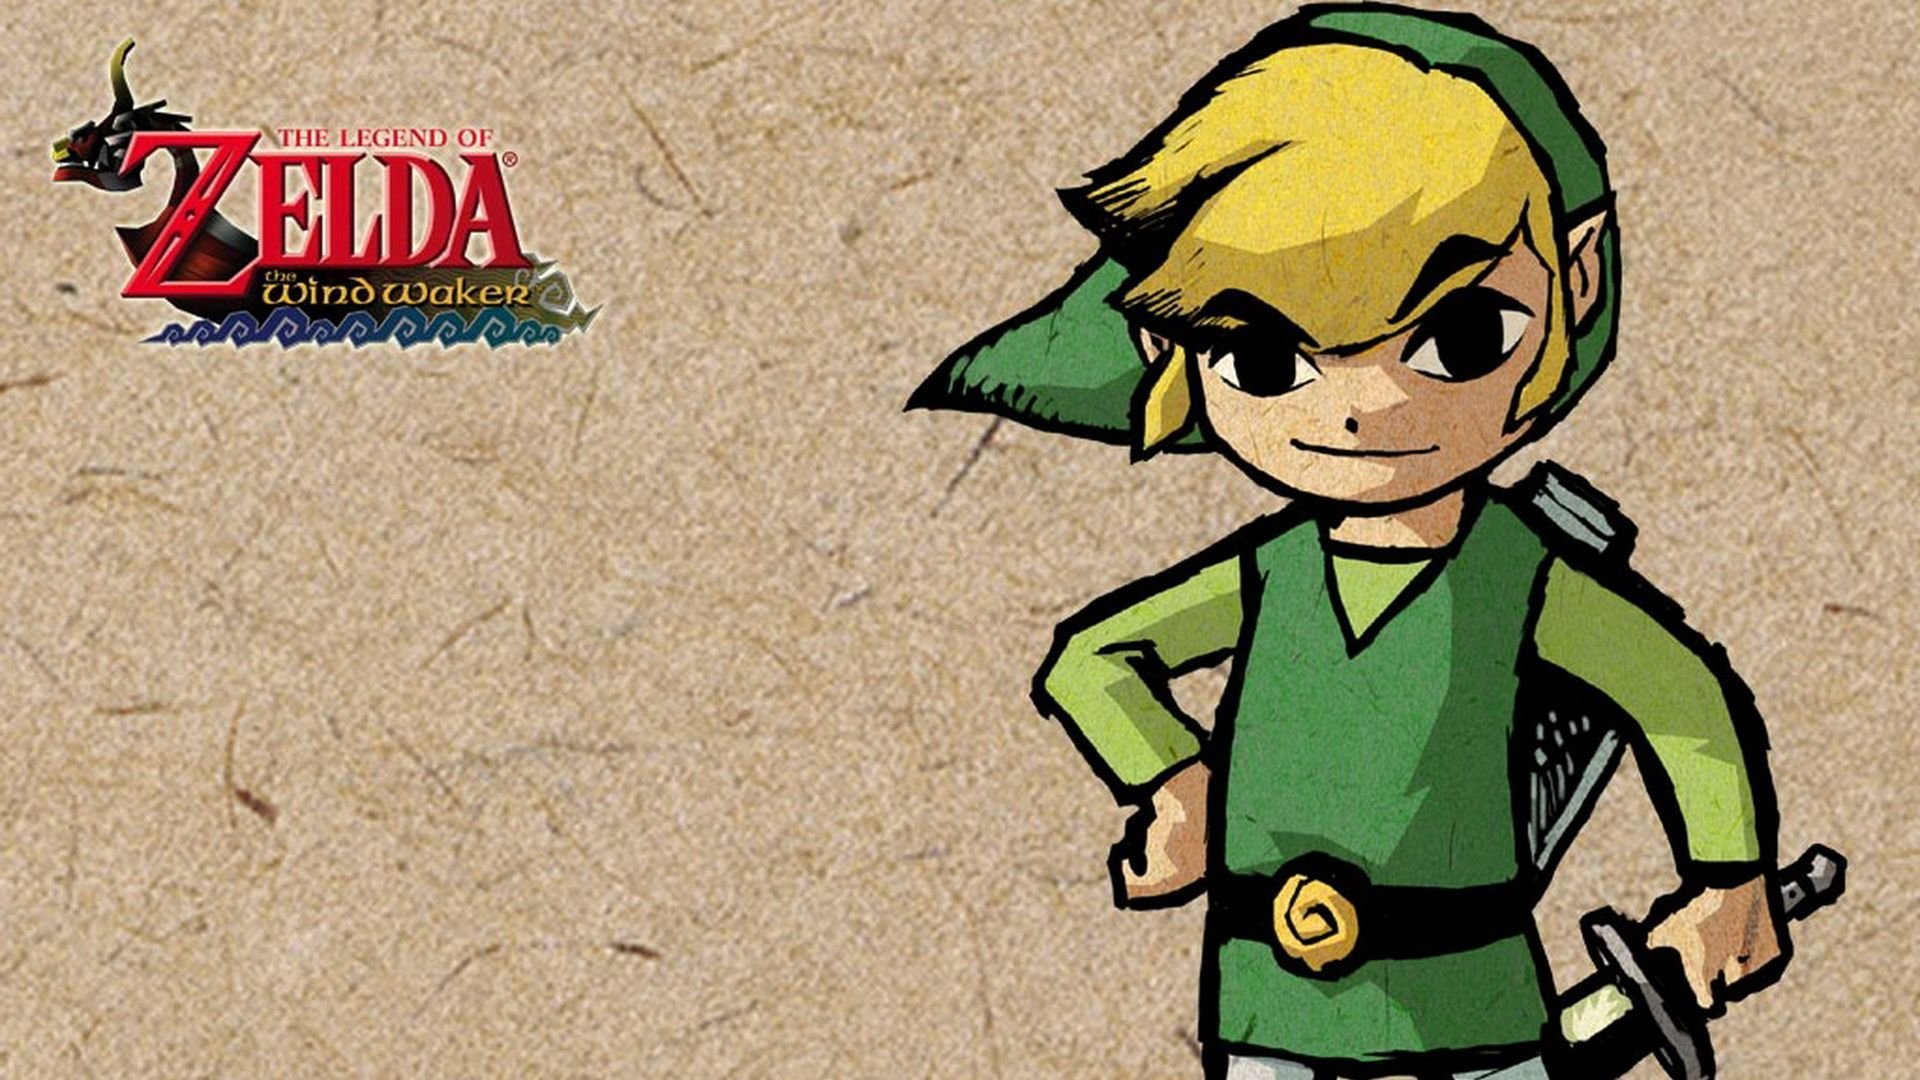 Download hd 1920x1080 The Legend Of Zelda: The Wind Waker desktop wallpaper ID:438918 for free